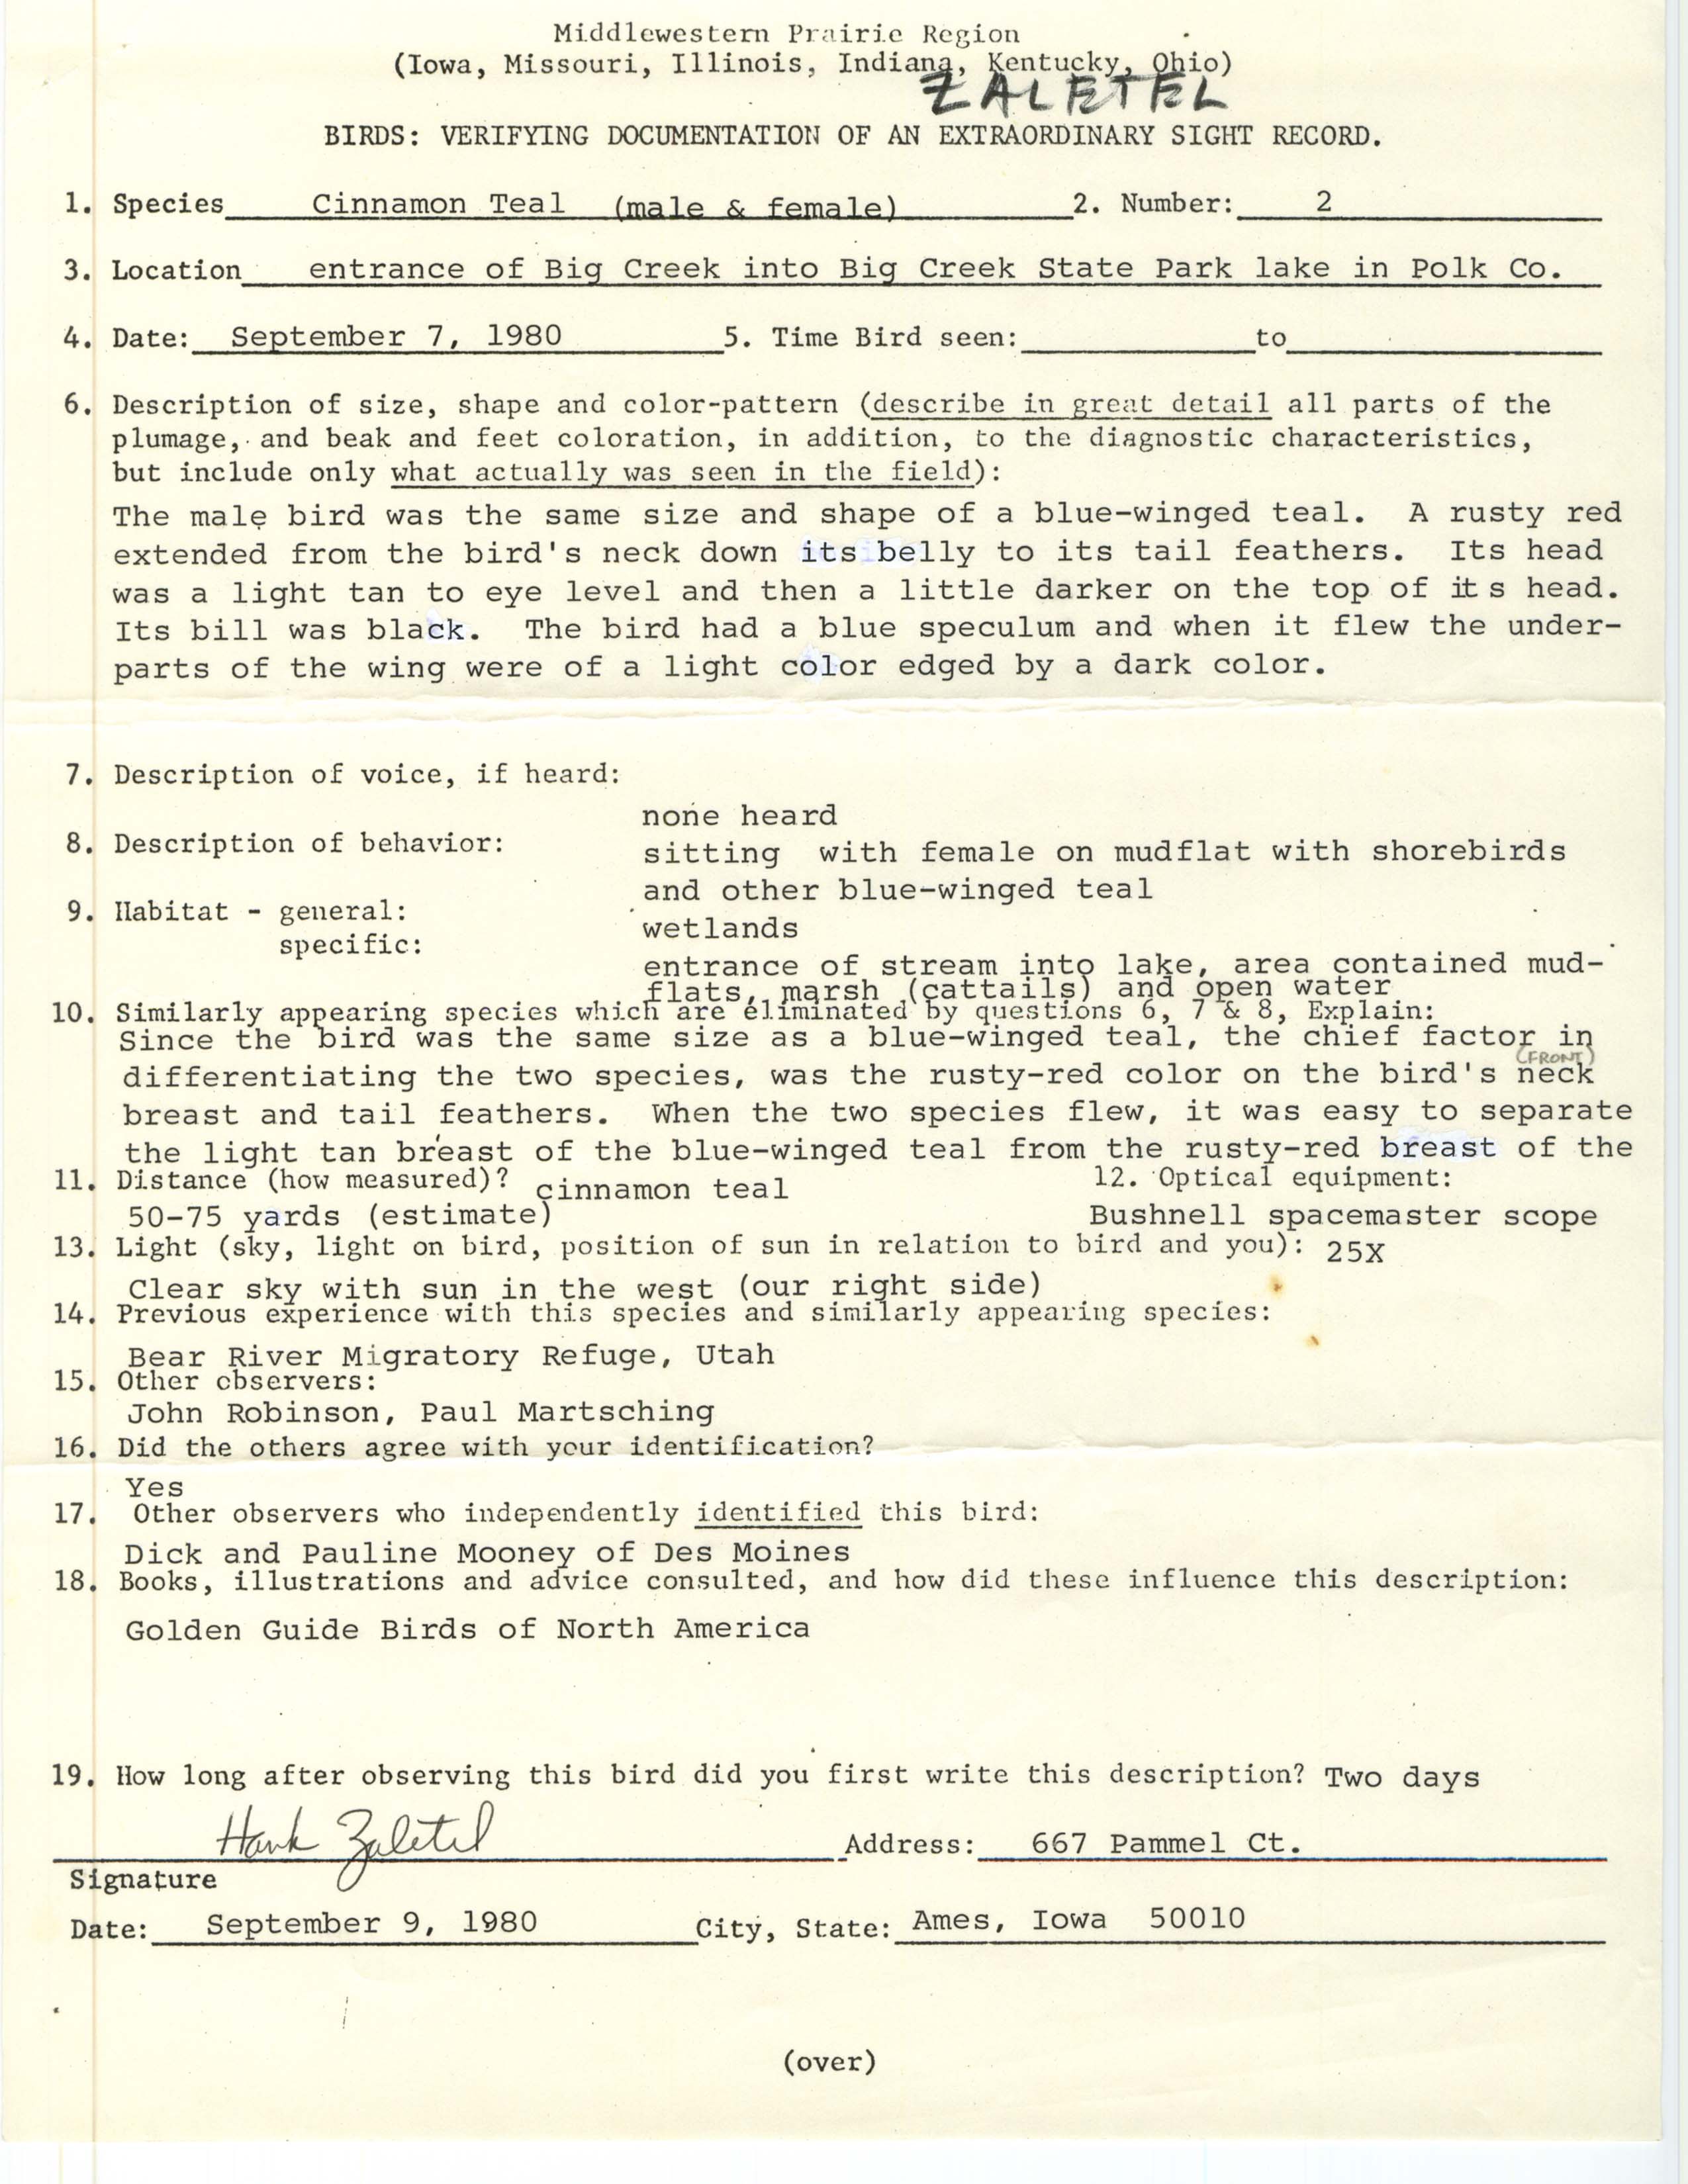 Rare bird documentation form for Cinnamon Teal at Big Creek State Park, 1980